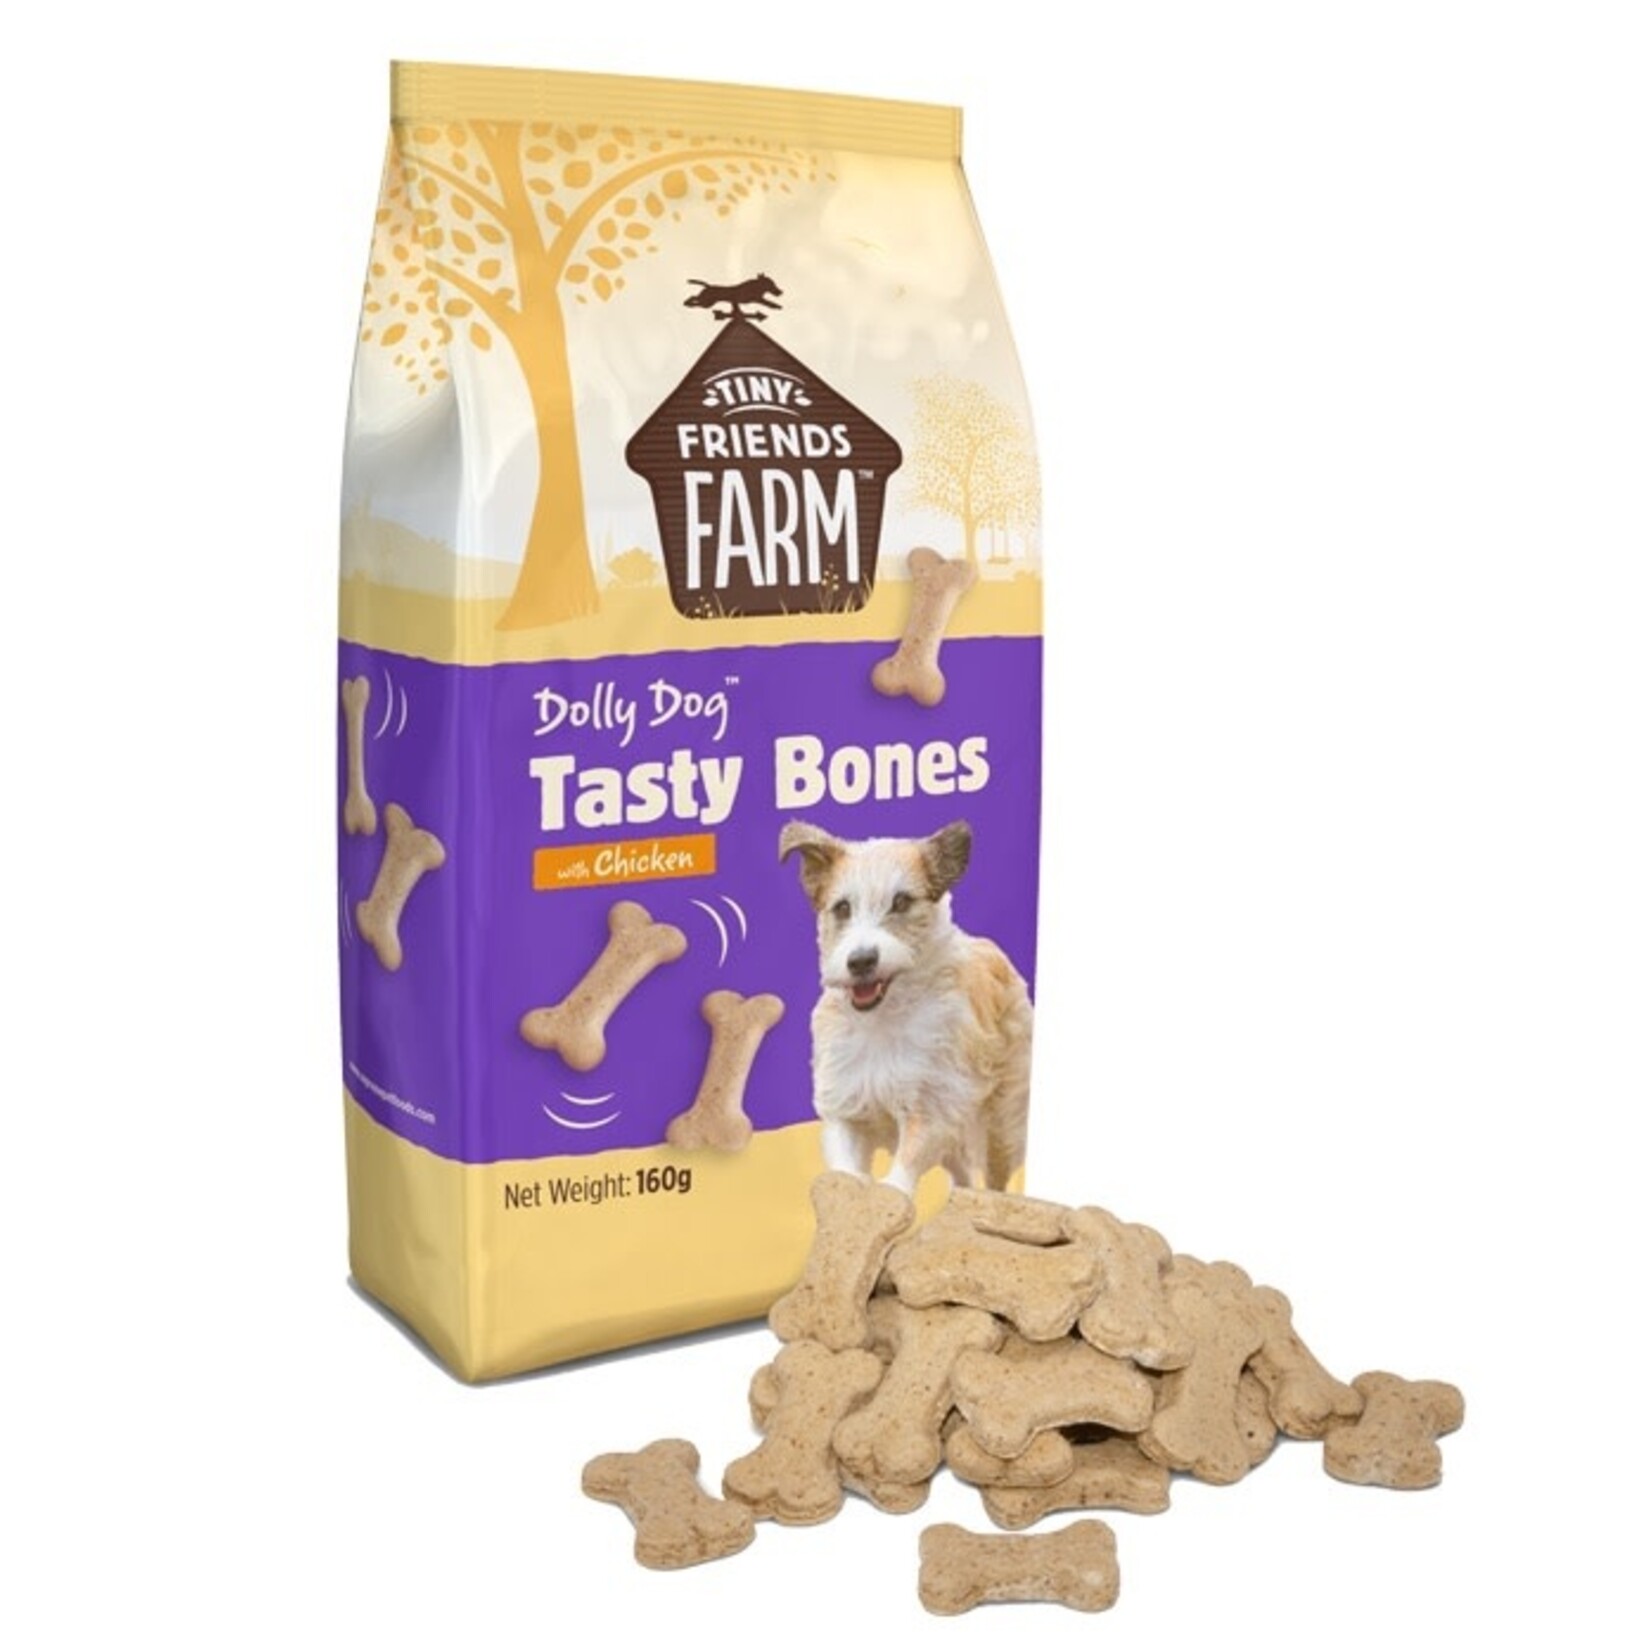 Supreme Tiny Friends Farm Dolly Dog Tasty Bones Chicken Treats, 160g